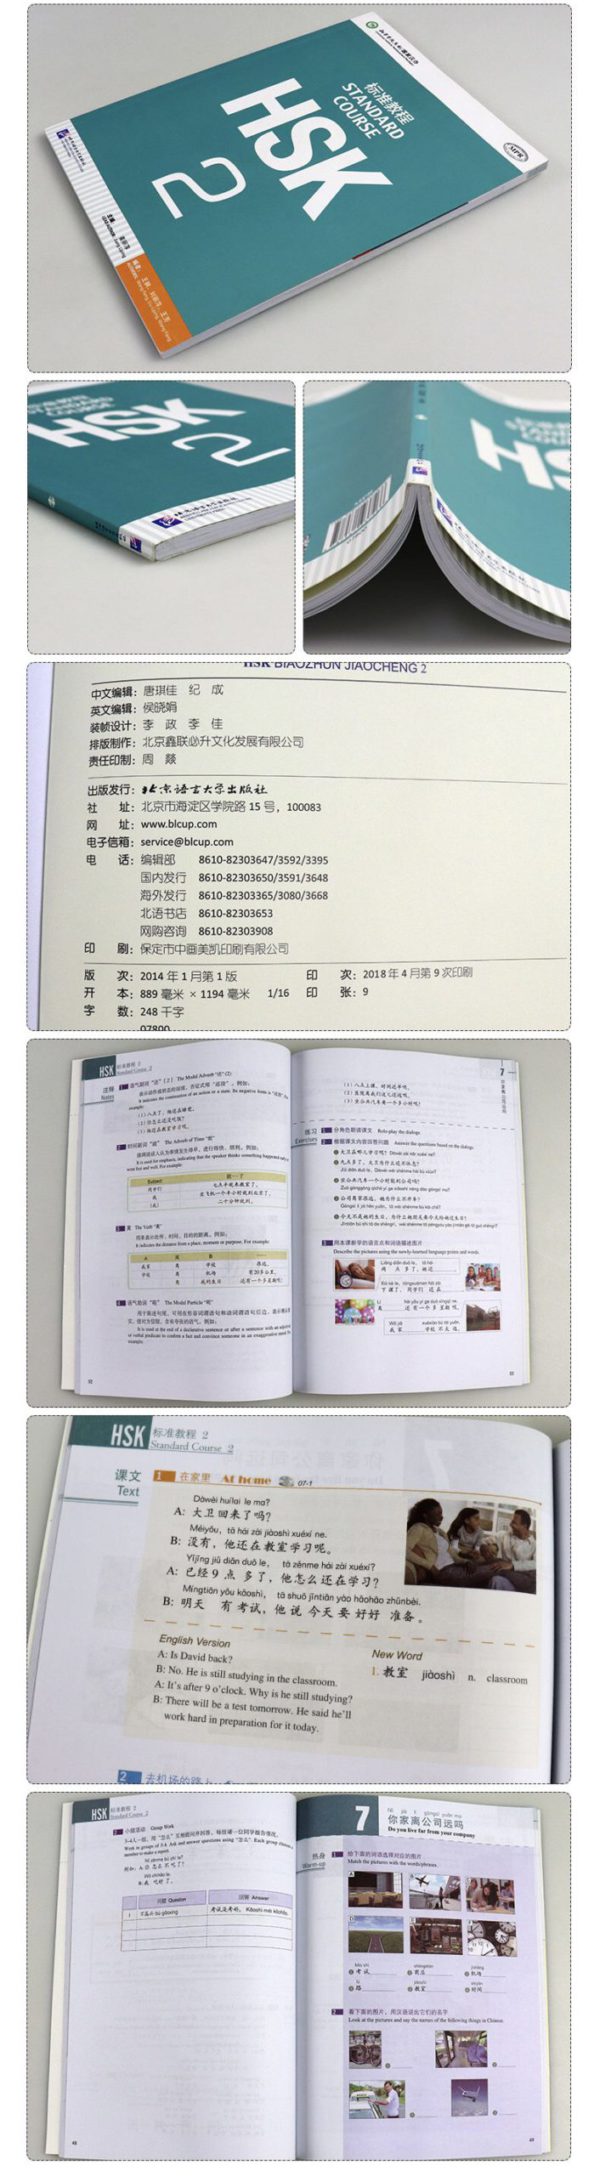 HSK 2 NIHAO LANGUAGE EDUCATION Mandarin Course